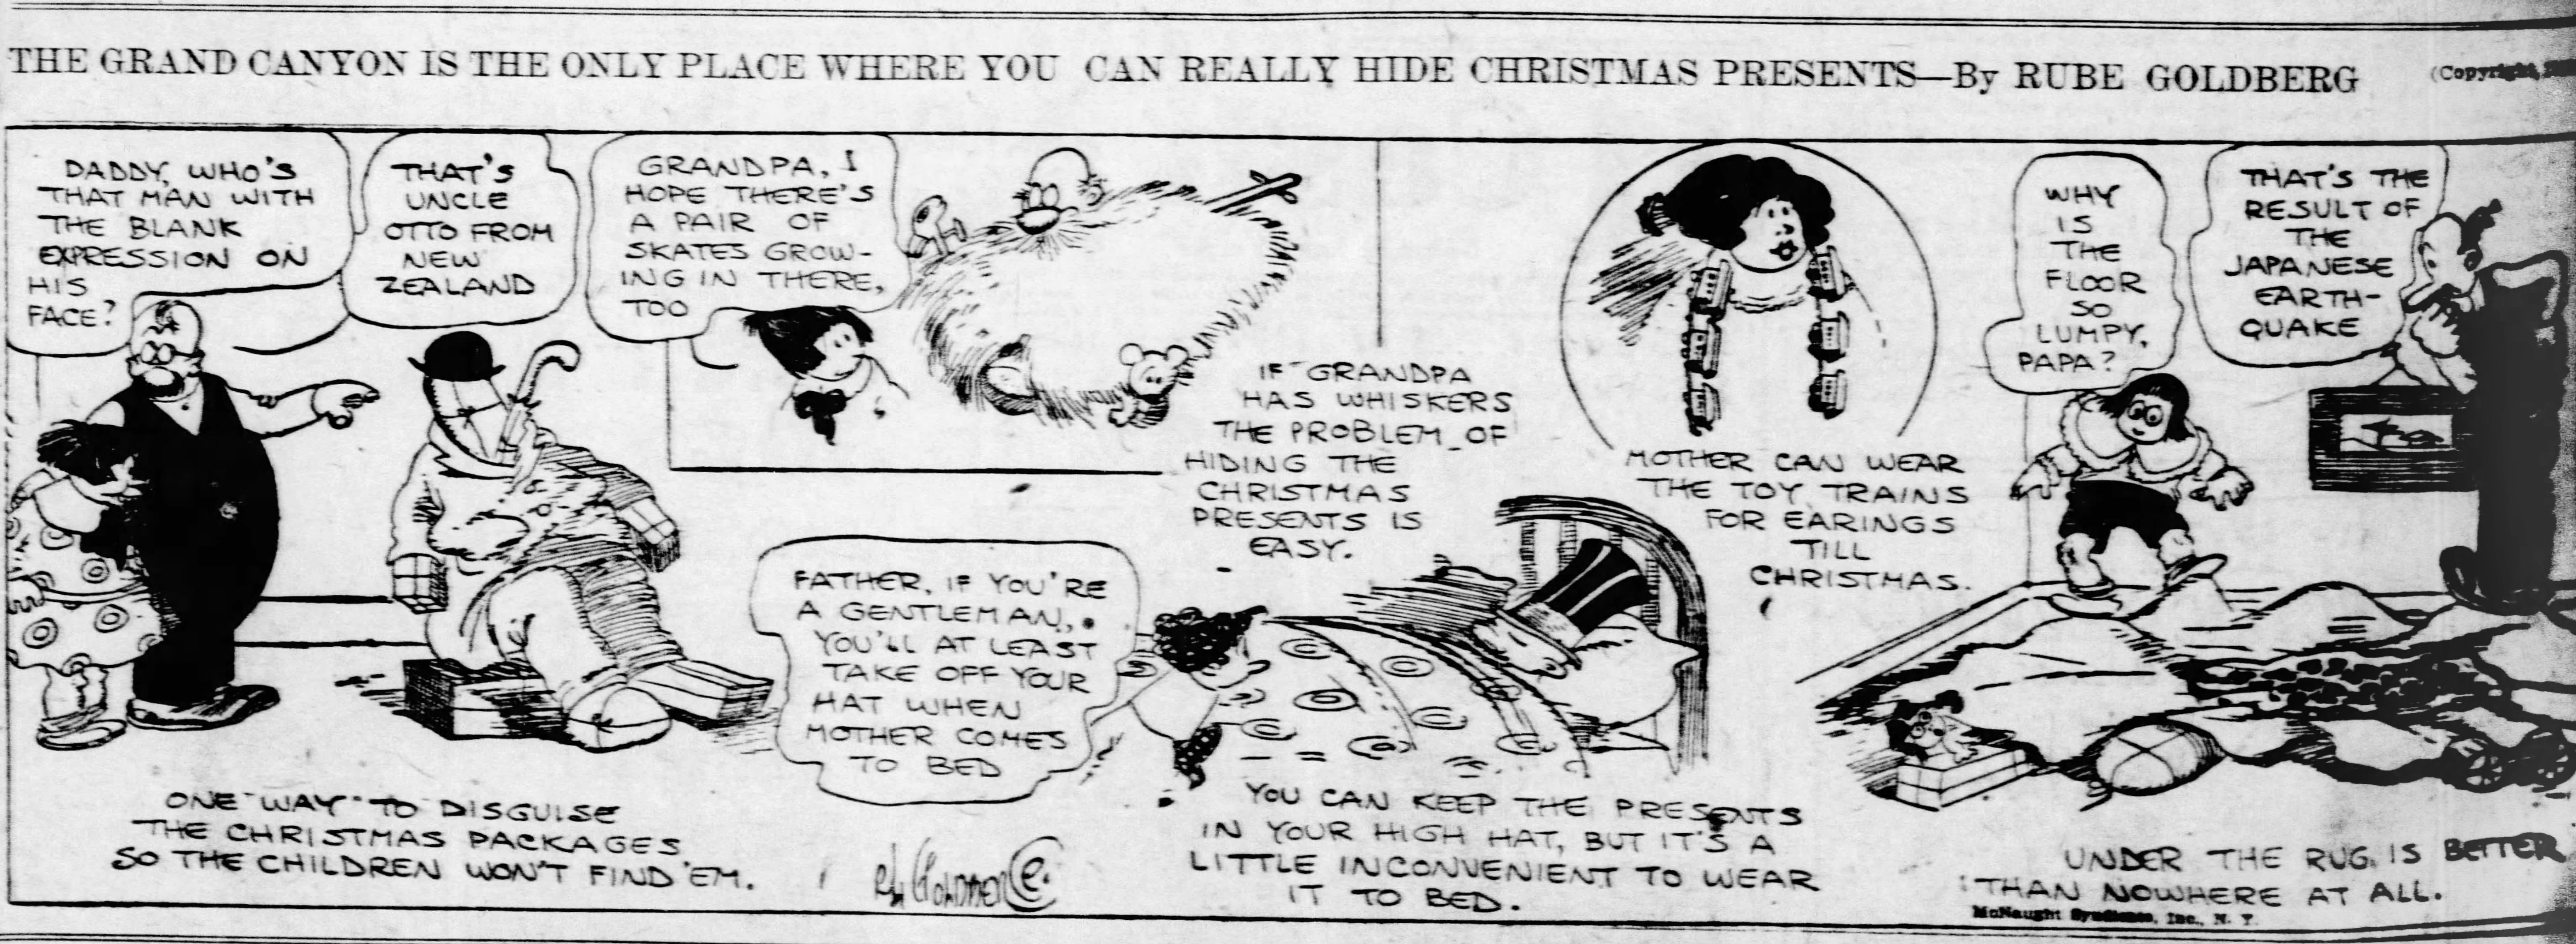 Rube Goldberg, December 21, 1923